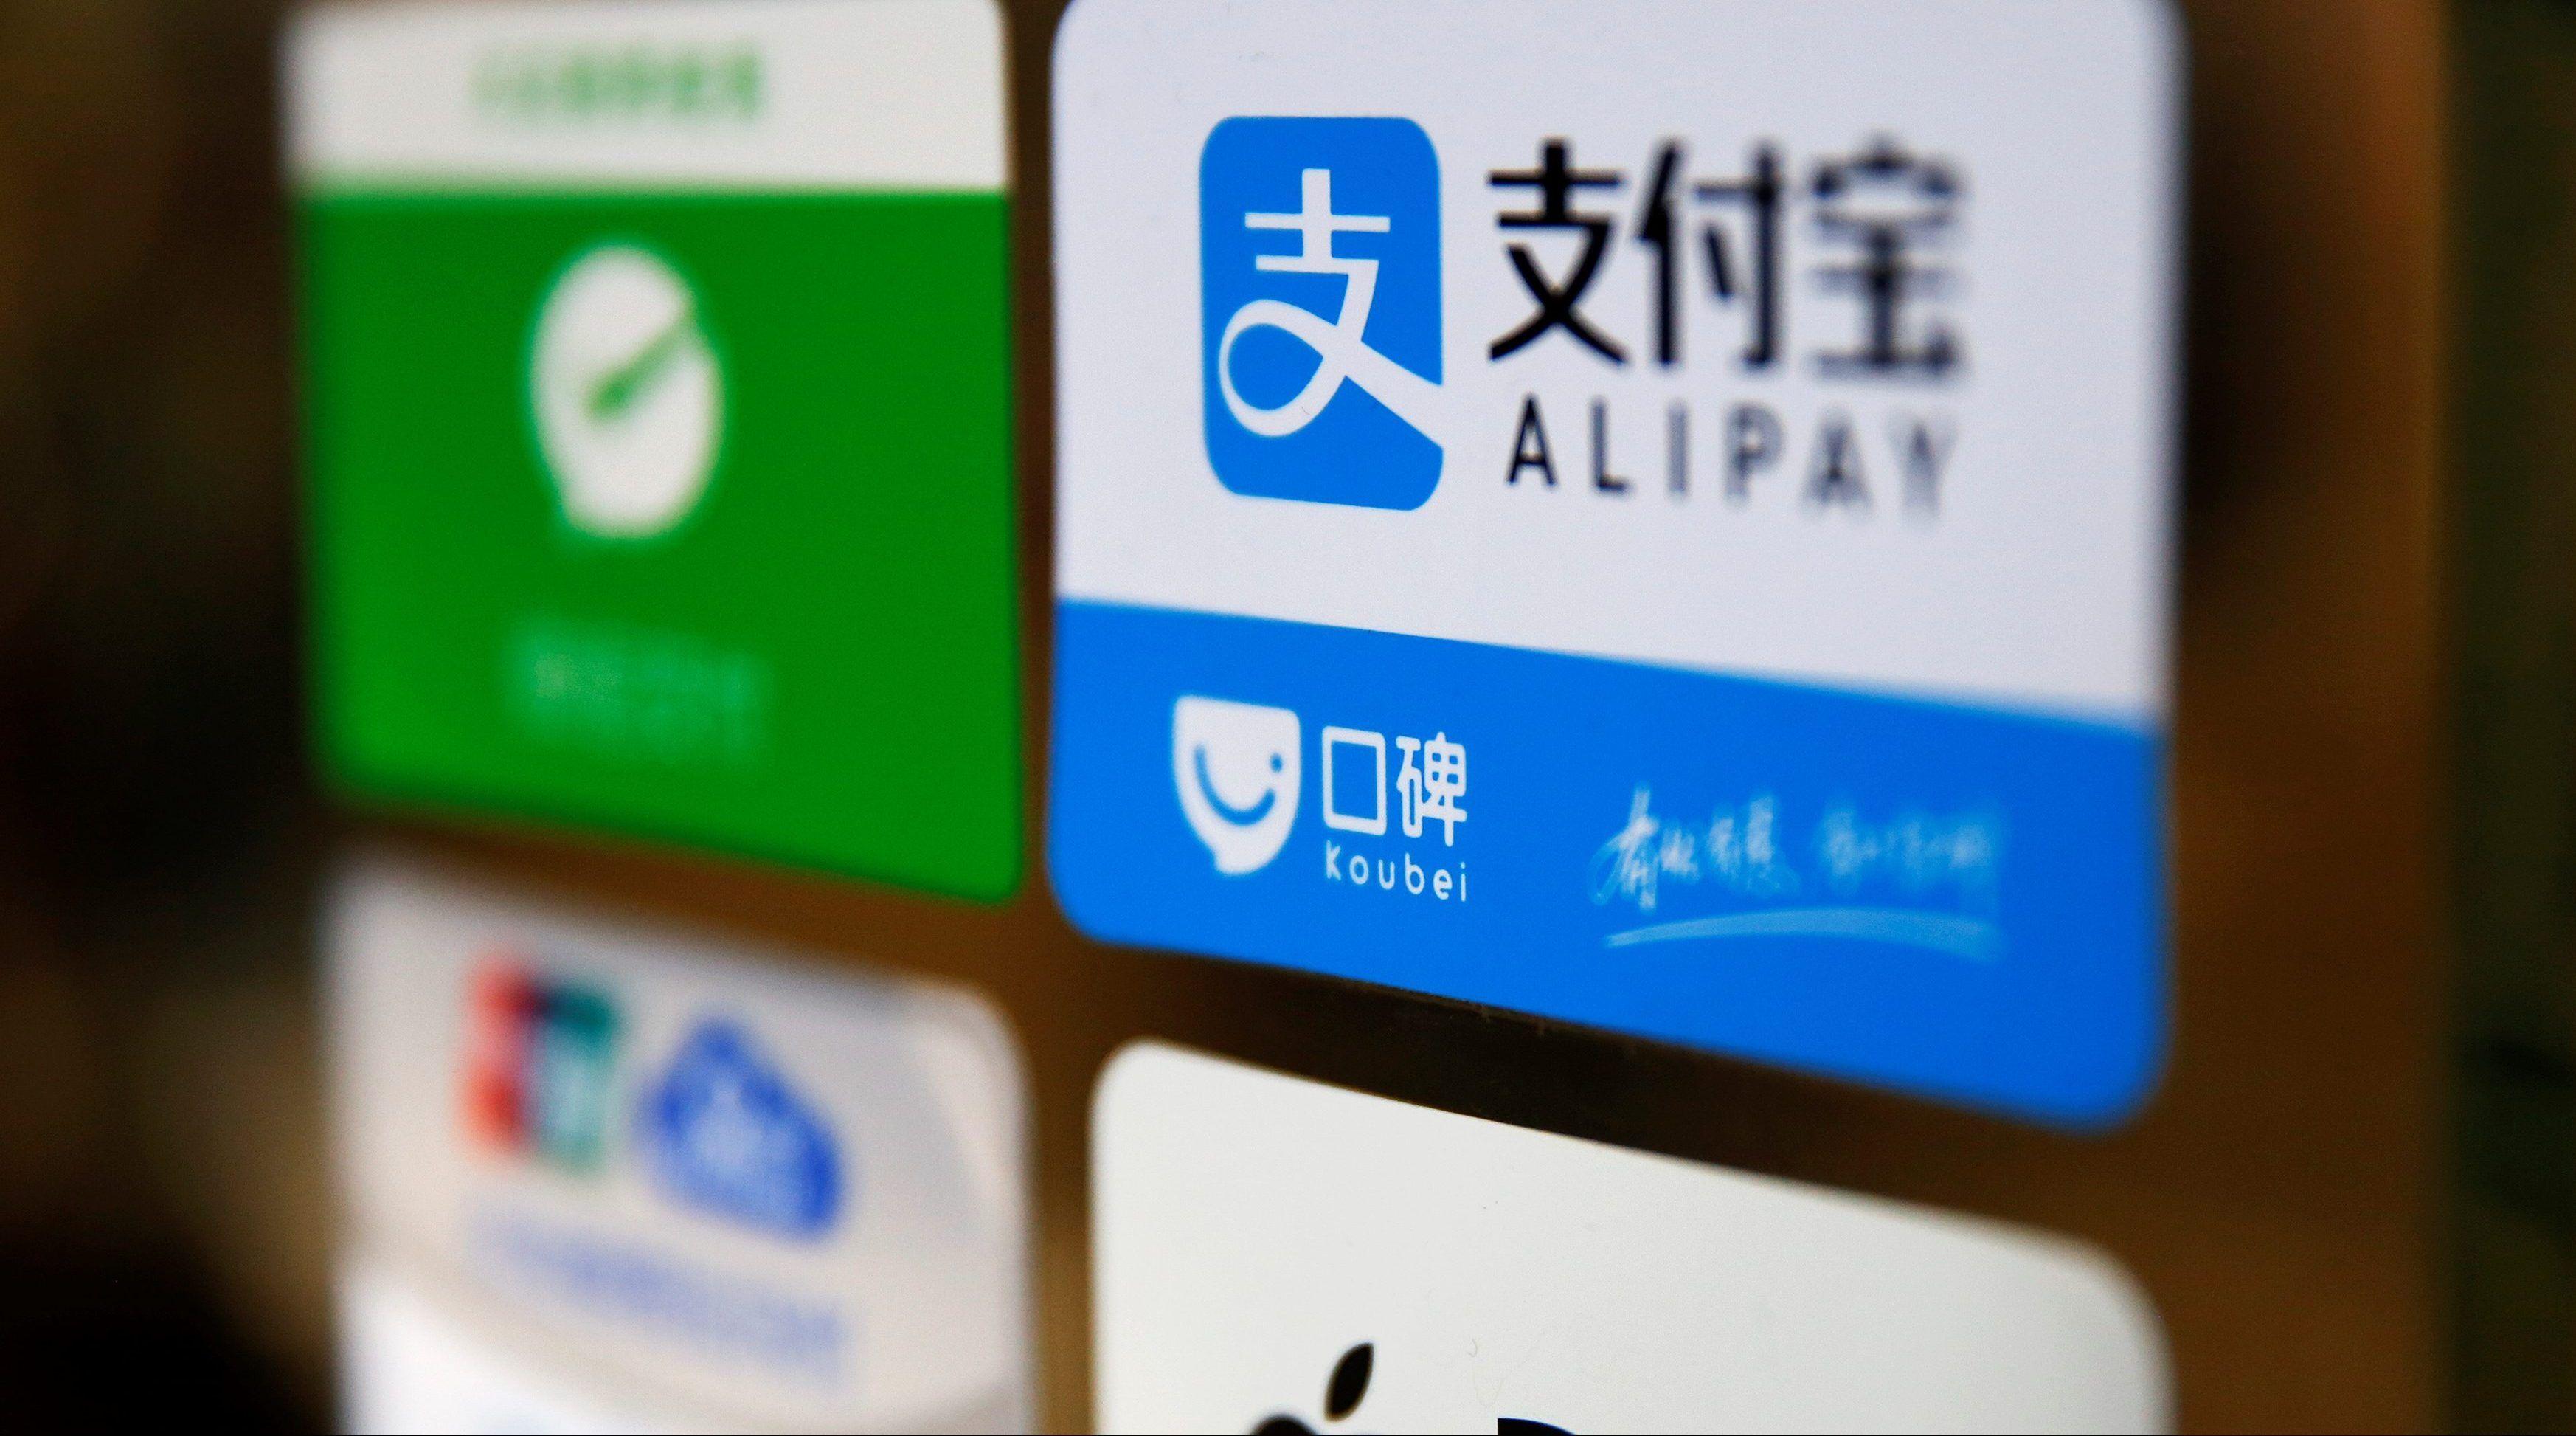 Alipay com. Alipay платежная система. Alipay логотип. Китайская платежная система. Платежная система Китая.